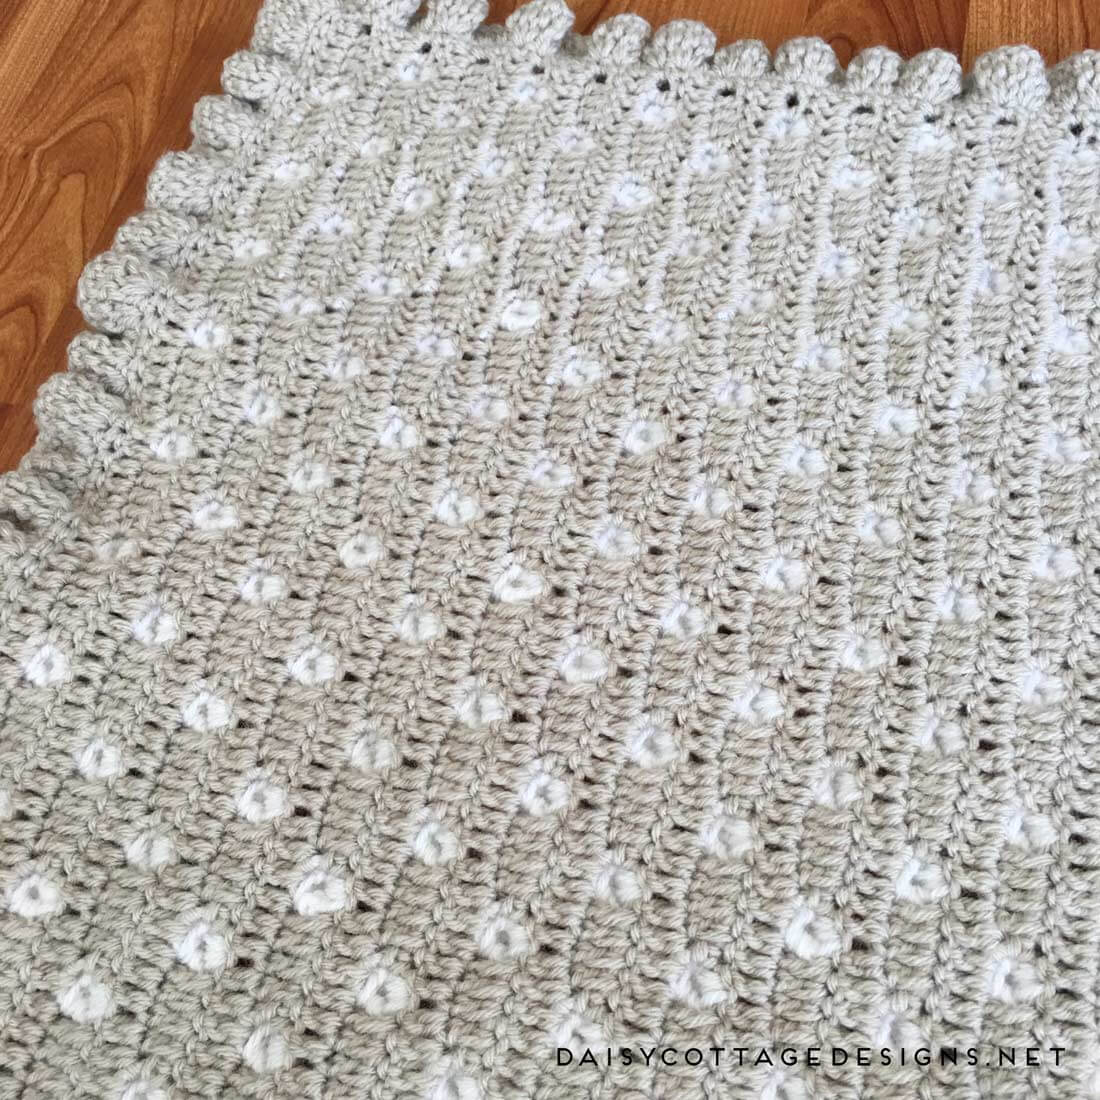 Crochet Patterns For Baby Crochet Ba Blanket Pattern From Daisy Cottage Designs